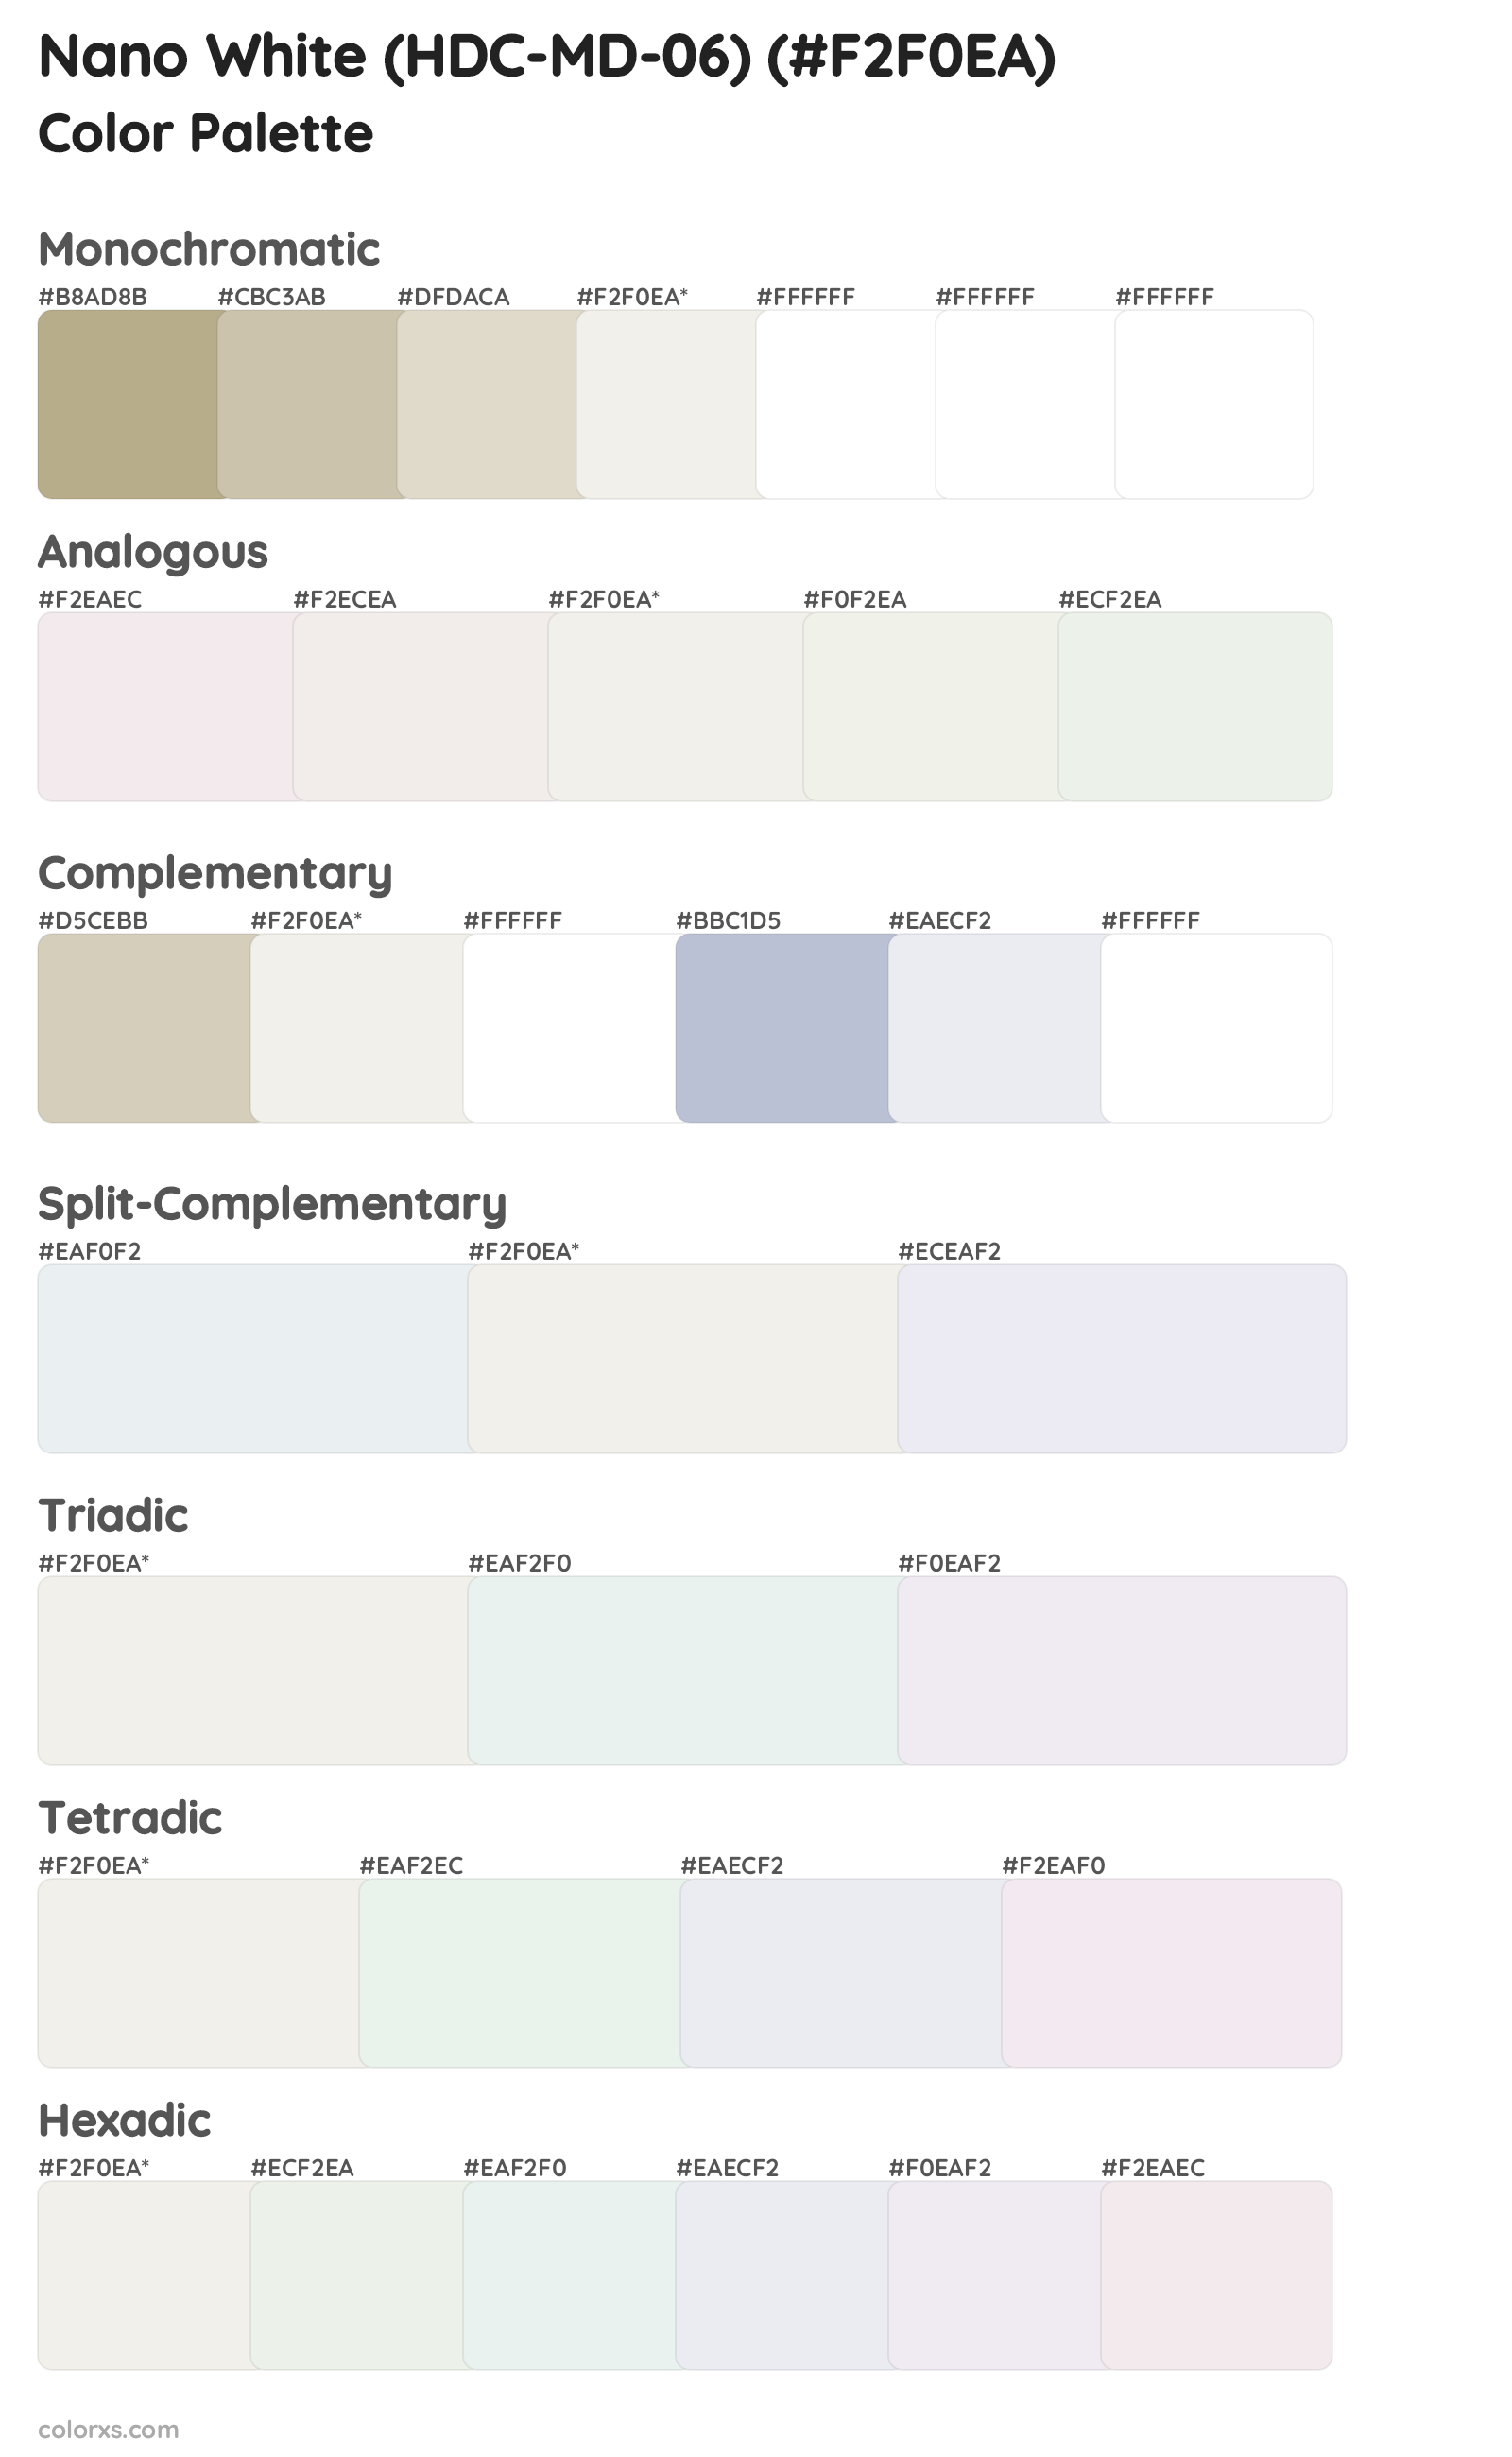 Nano White (HDC-MD-06) Color Scheme Palettes